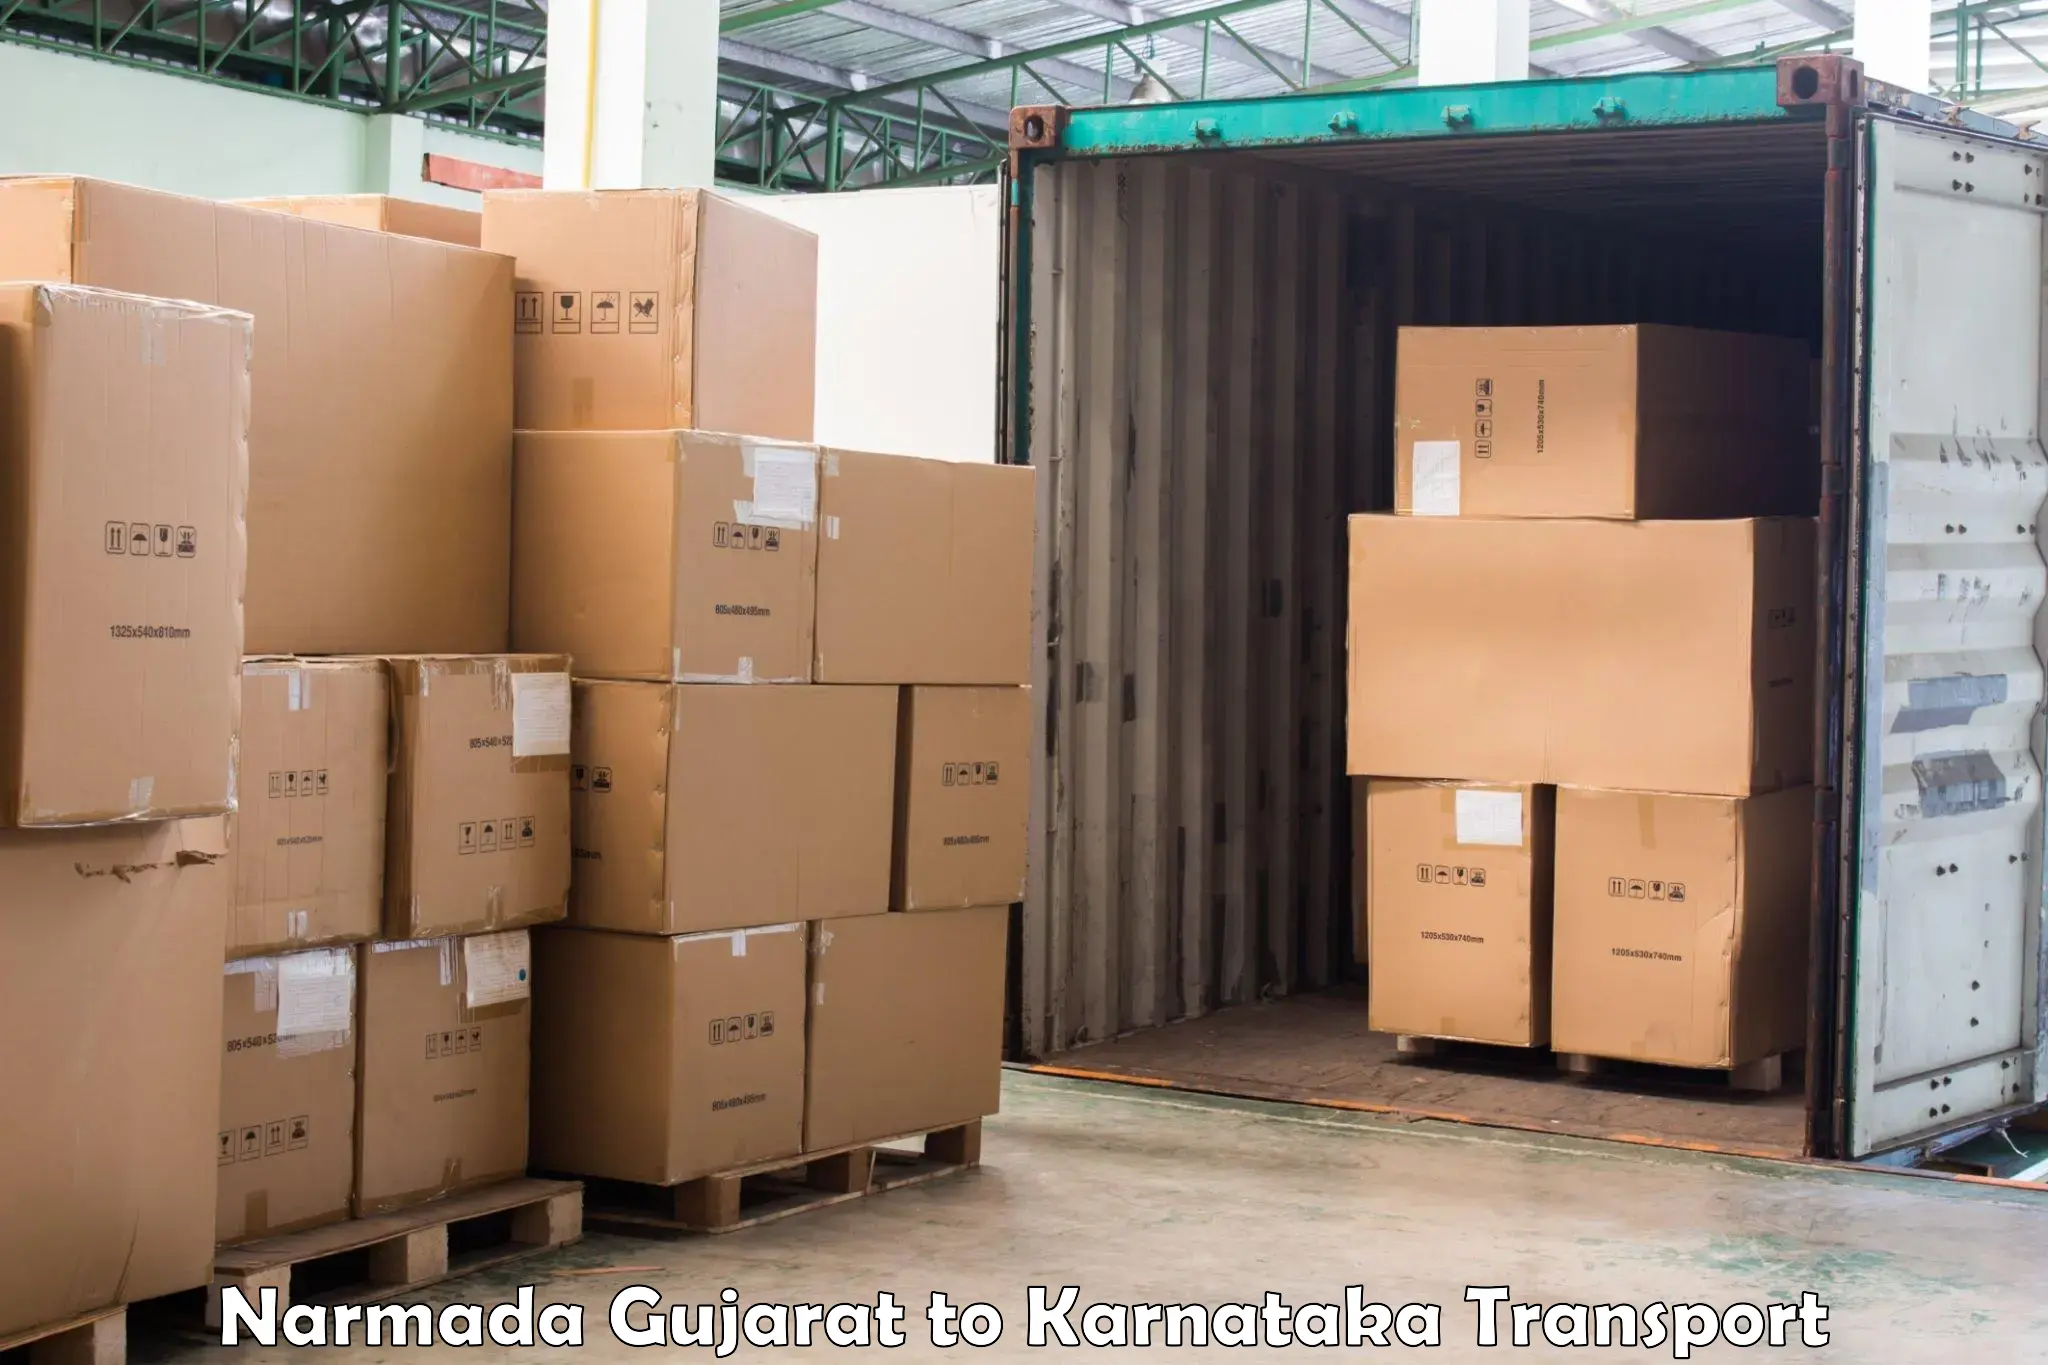 Sending bike to another city Narmada Gujarat to Karwar